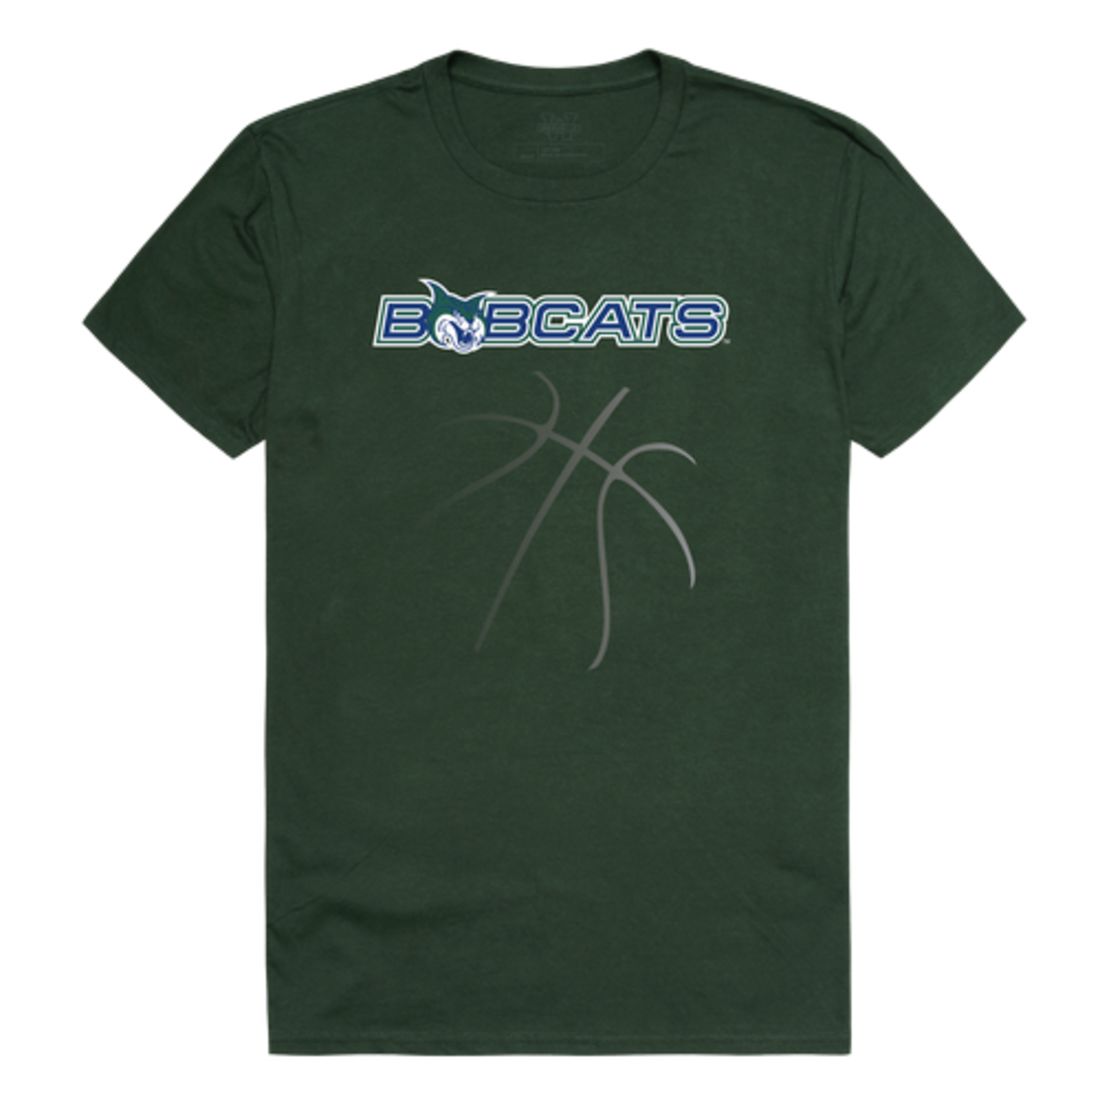 Georgia College and State University Bobcats Basketball T-Shirt Tee